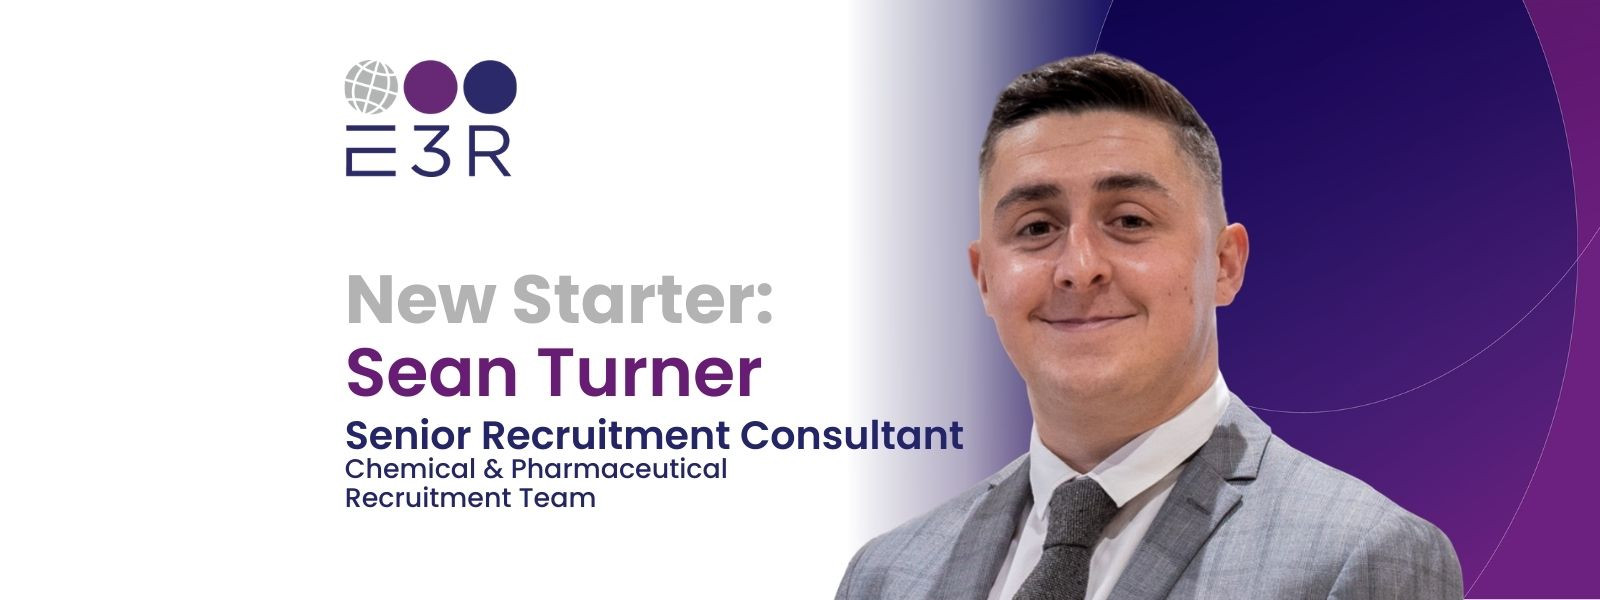 Chemical & Pharmaceutical Recruitment team welcomes new Senior Recruitment Consultant, Sean Turner